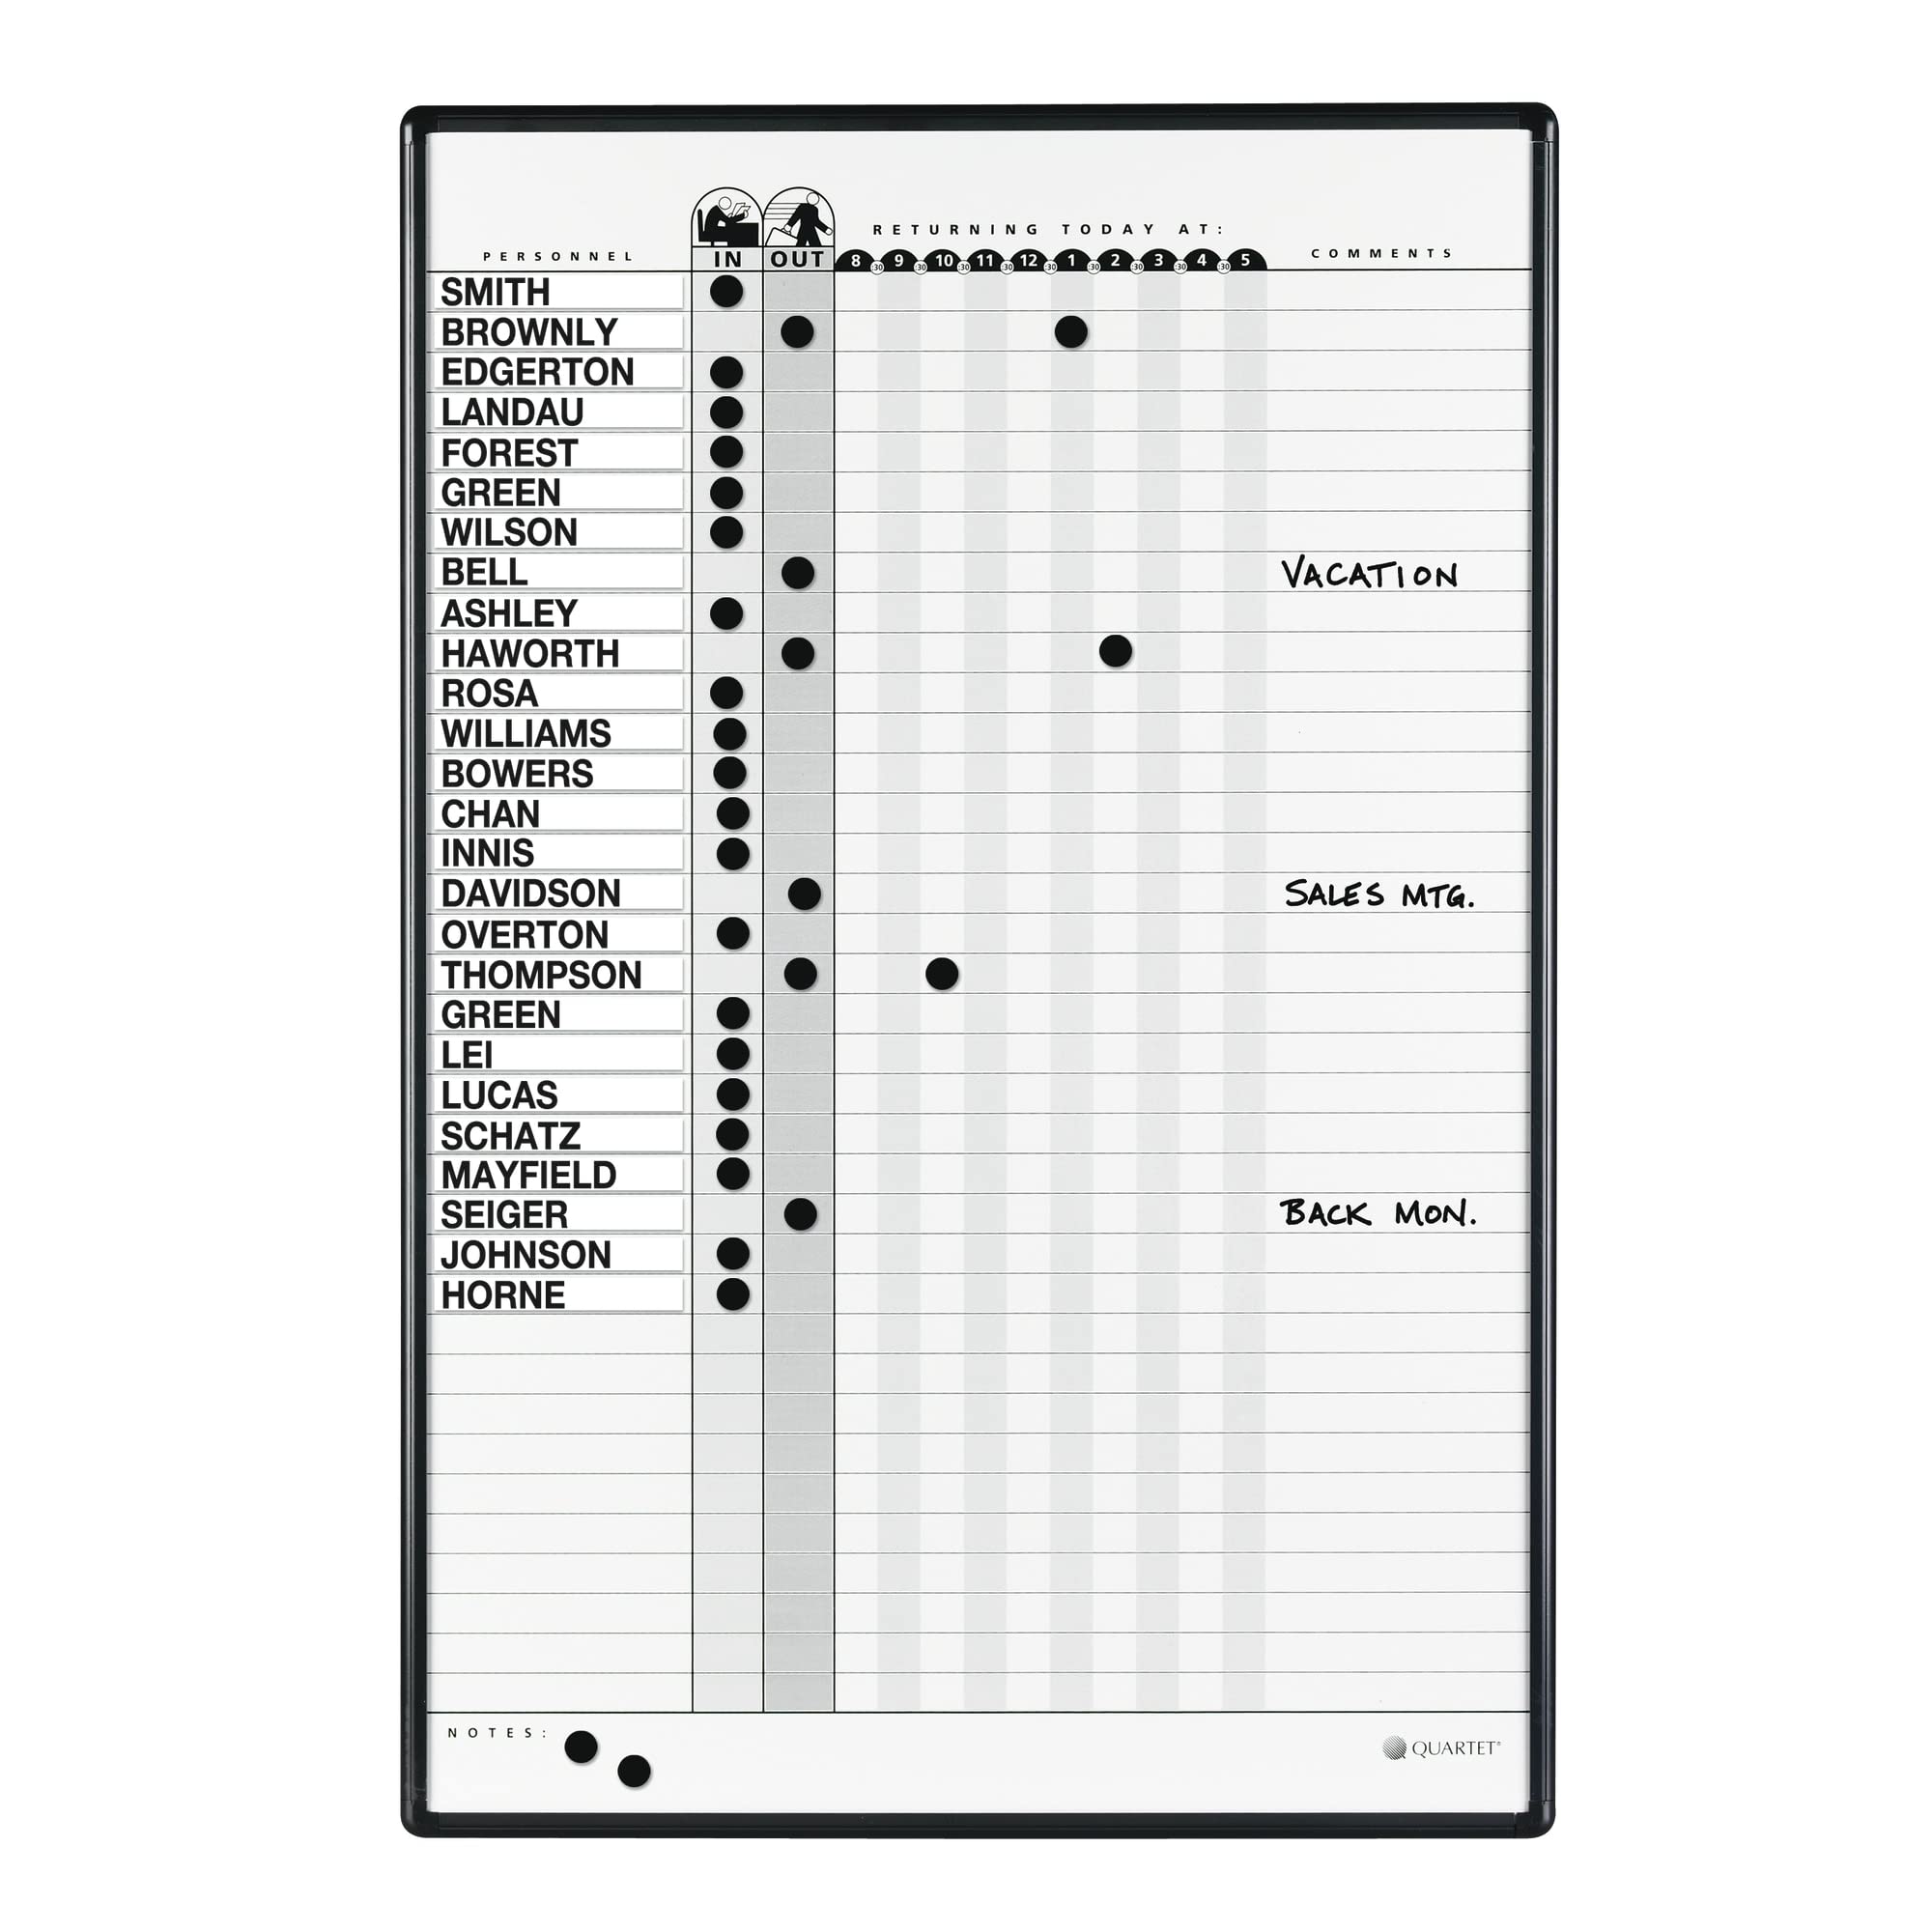 Quartet Gray Duramax Porcelain Magnetic in/Out Personnel Board System, 36 Names, 3 x 2 Feet, Black Aluminum Frame (783G )